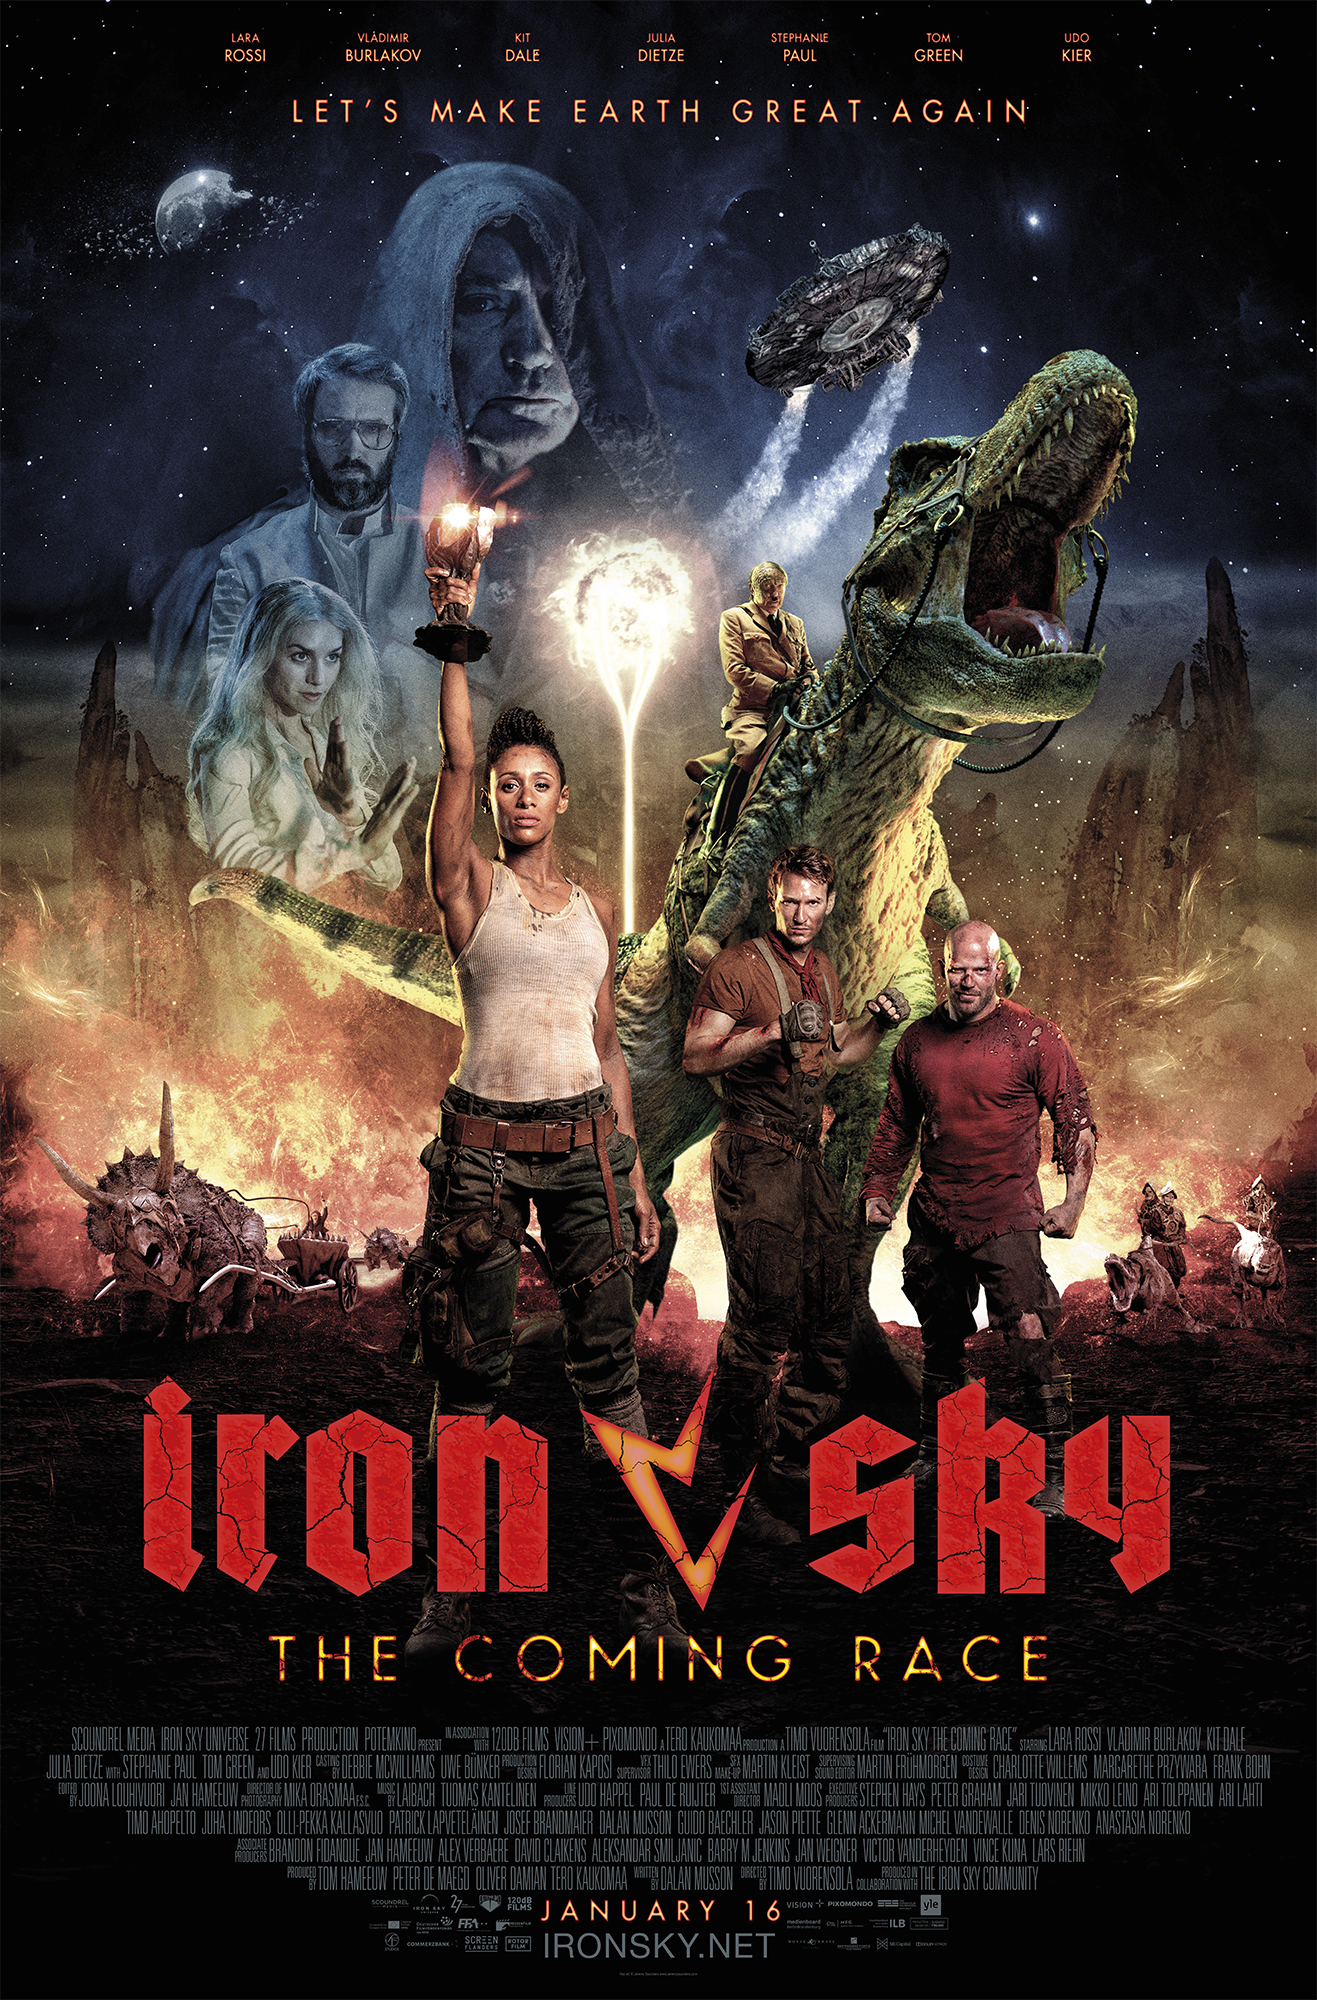 iron sky the coming race (2019) ทัพเหล็กนาซีถล่มโลก 2